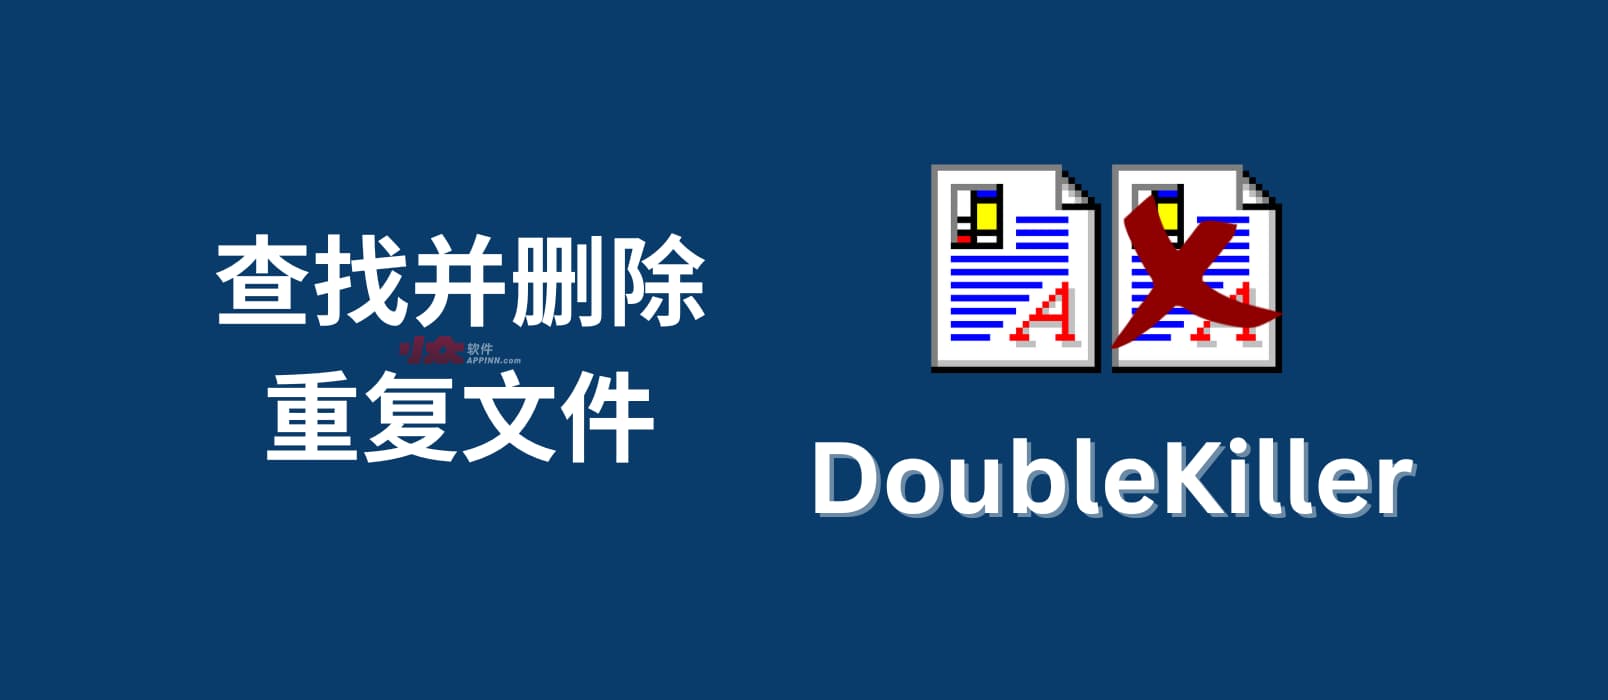 DoubleKiller – 查找并删除重复文件[Windows]